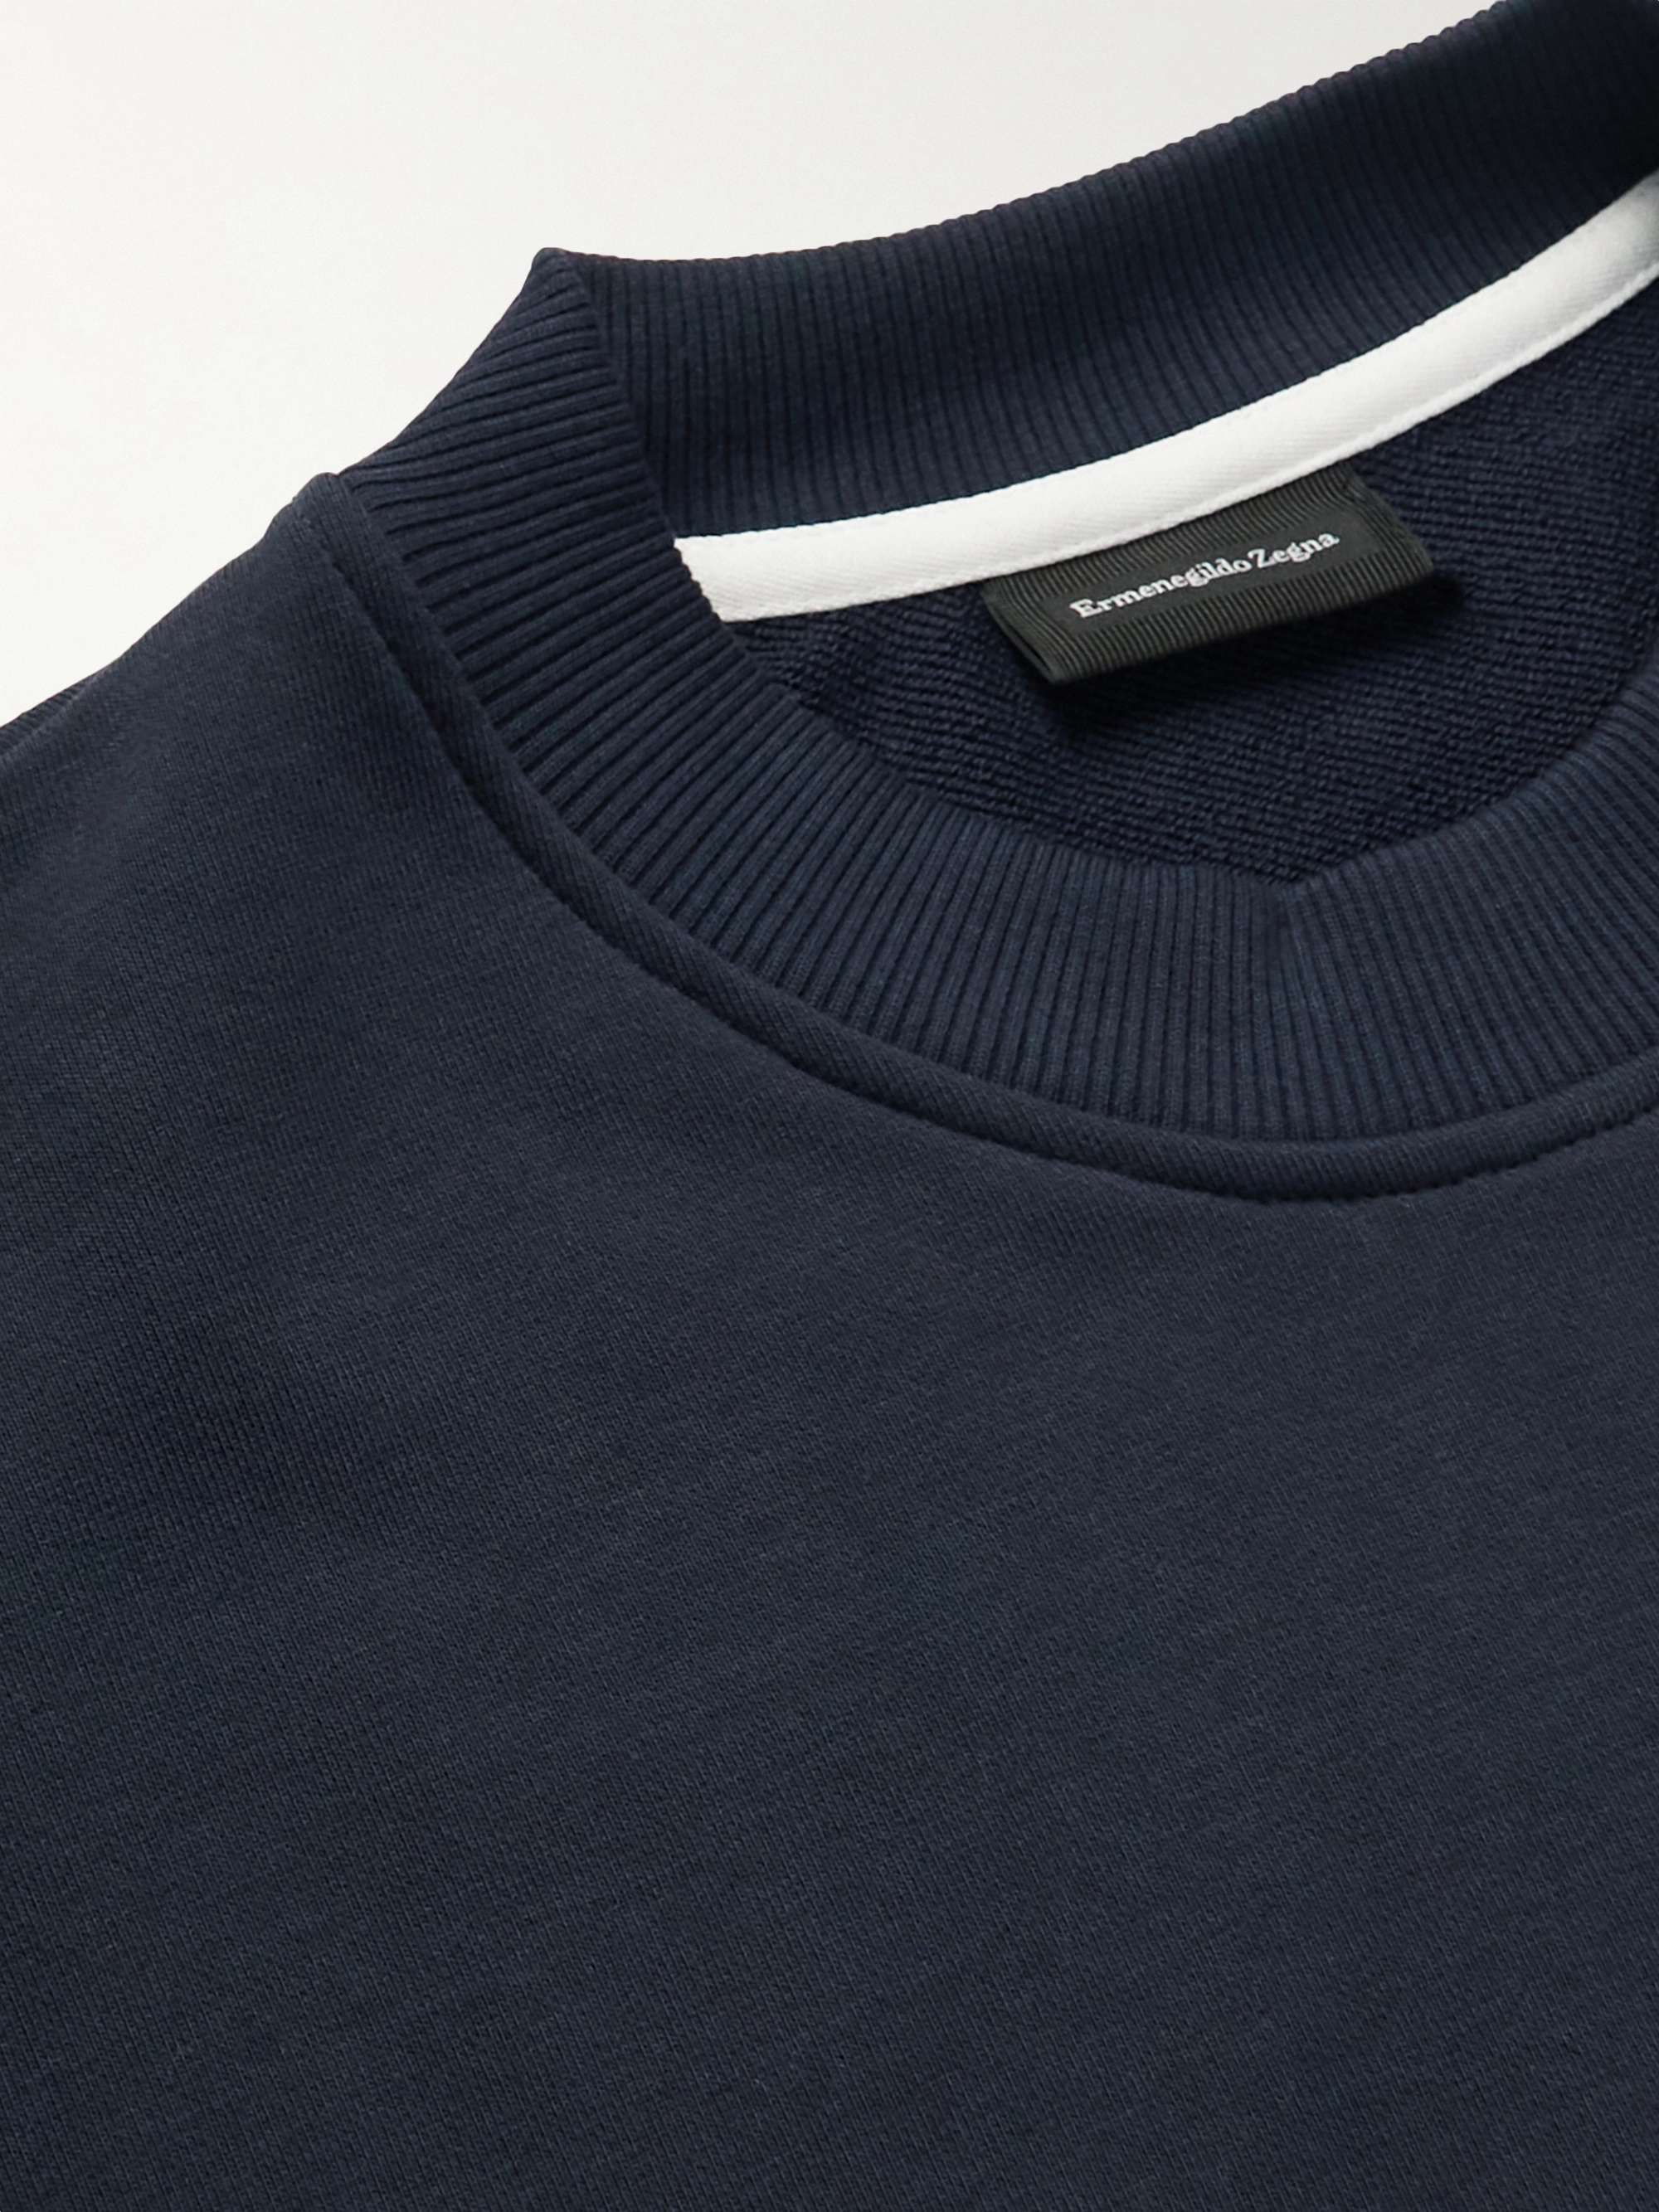 ERMENEGILDO ZEGNA Logo-Embroidered Cotton-Blend Jersey T-Shirt